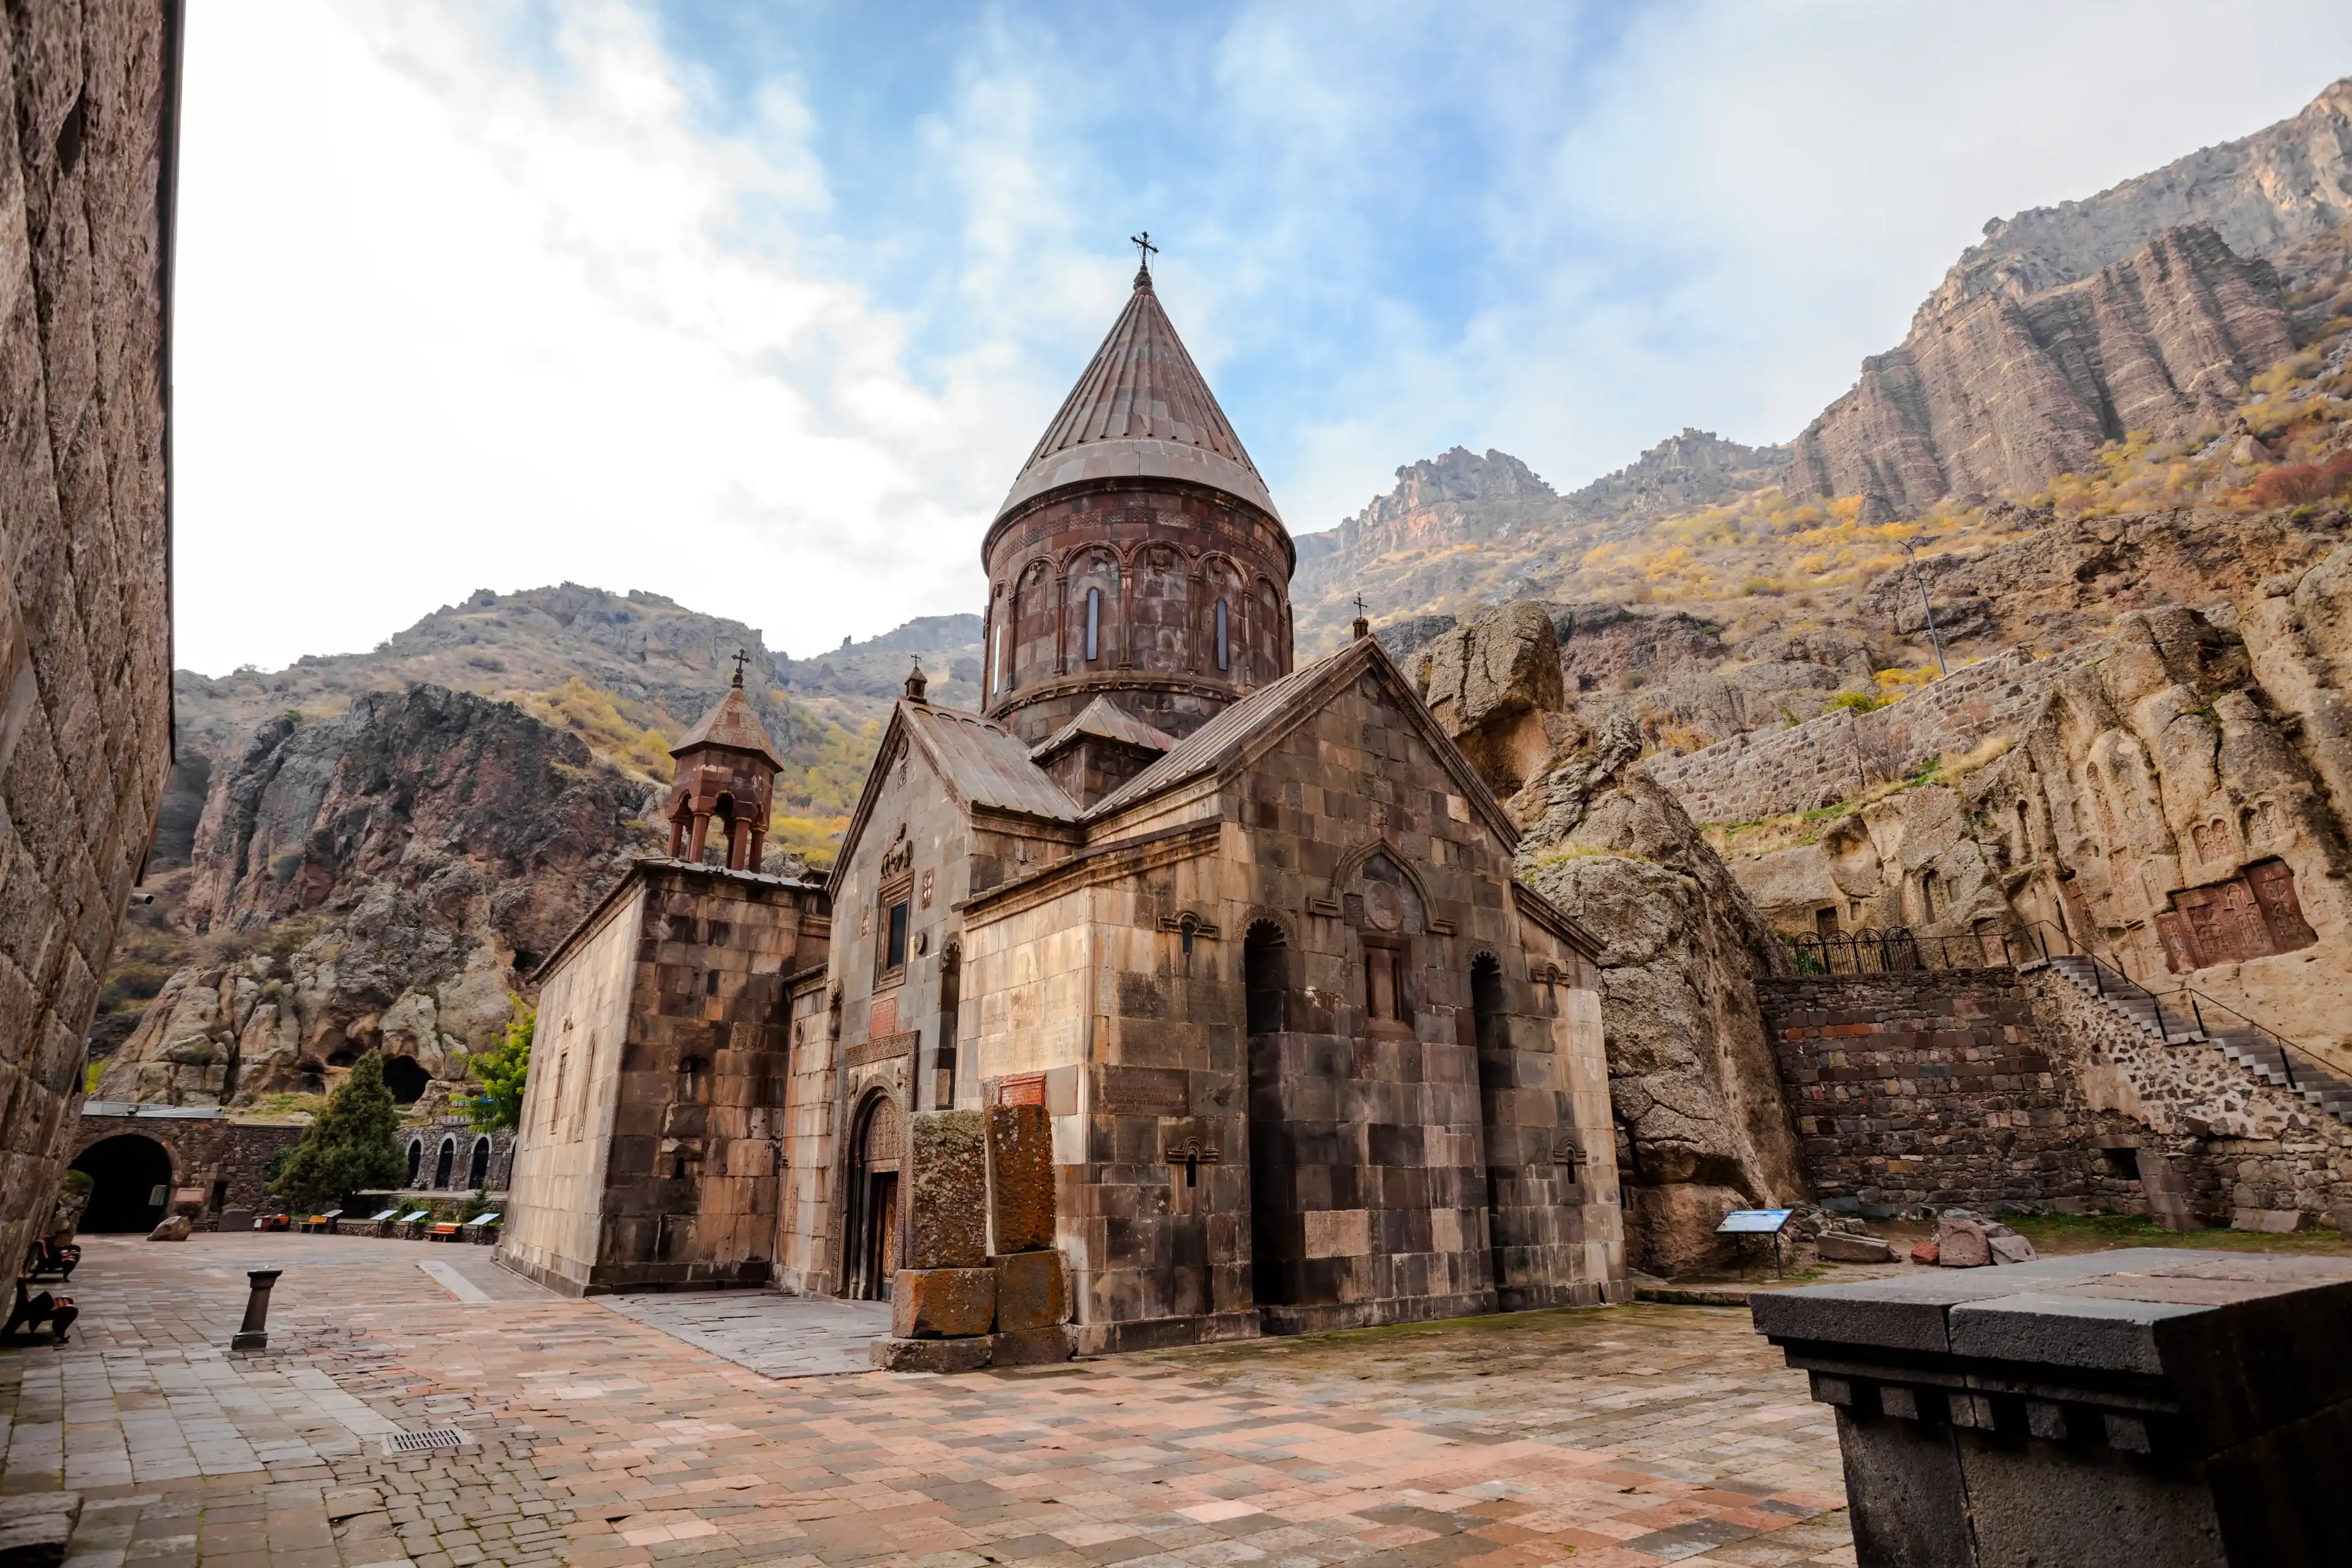 Kotayk hotels. Best hotels in Kotayk, Armenia